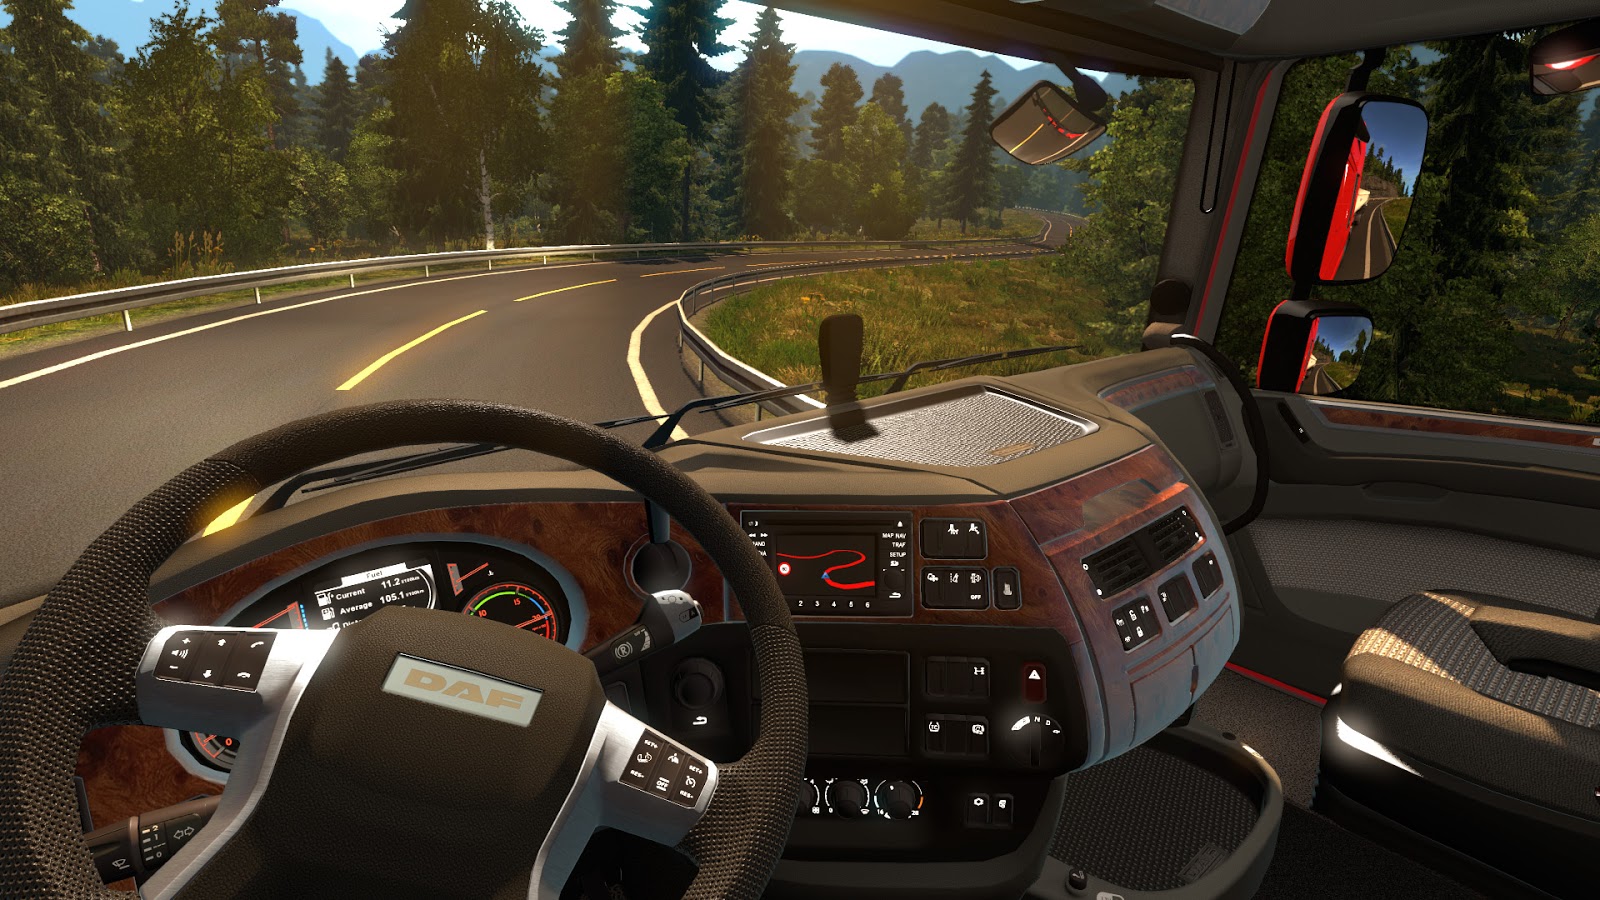 latest version of euro truck simulator 1